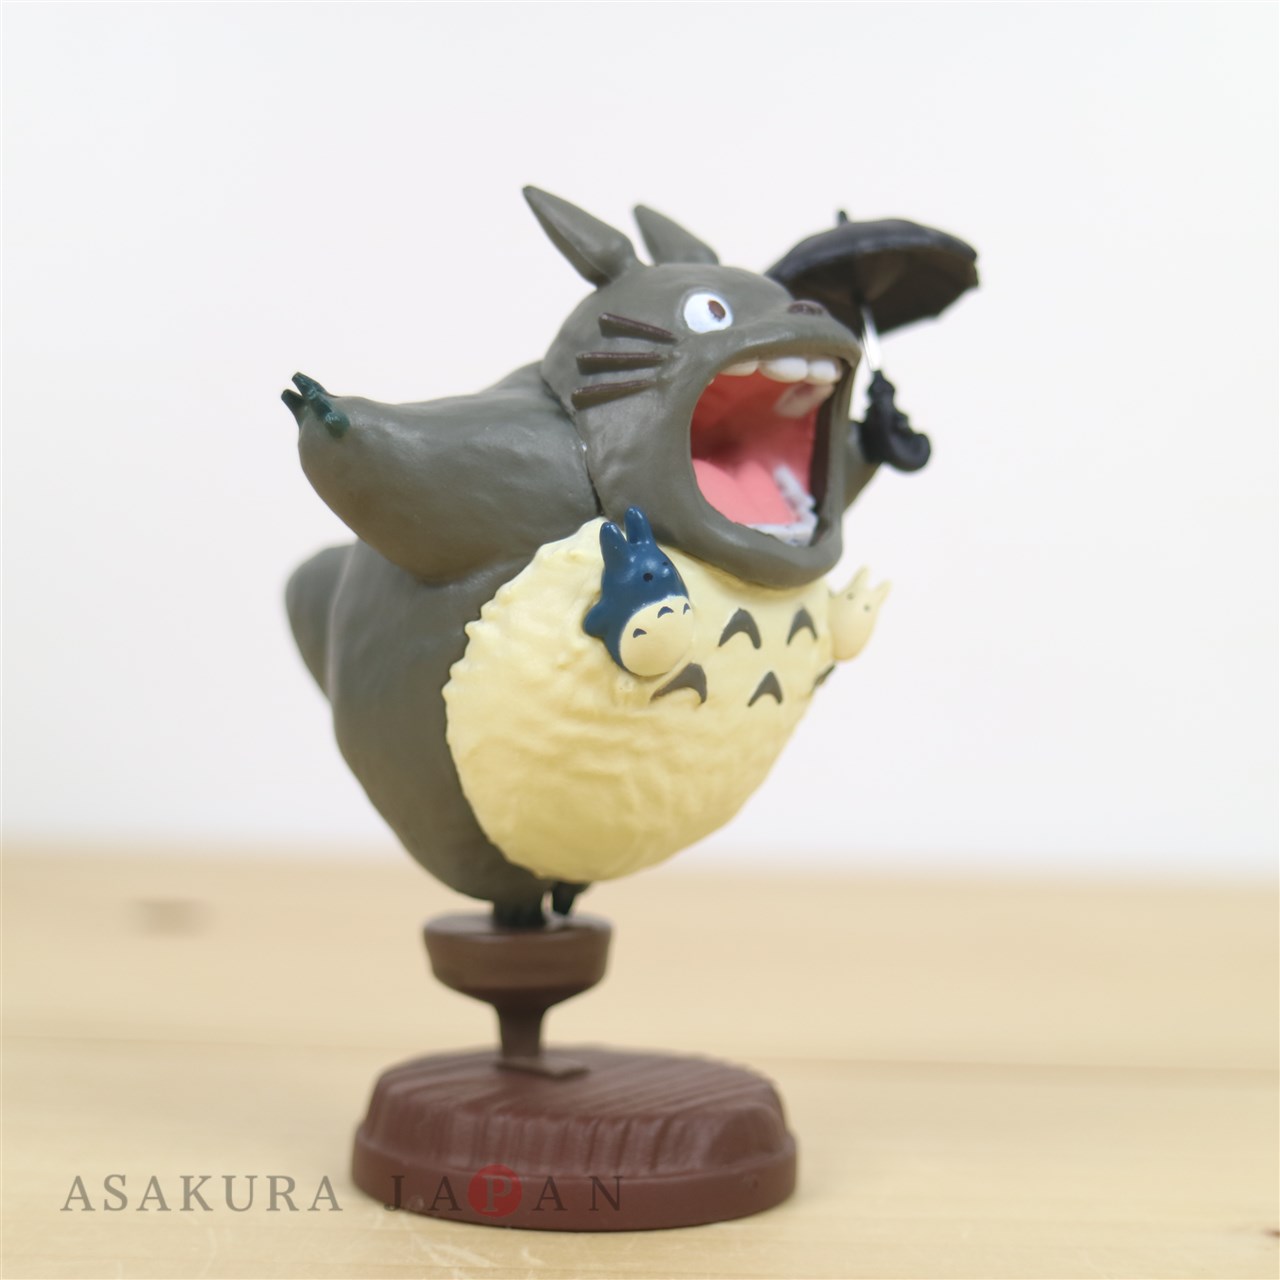 New Studio Ghibli collection includes Inami chokuku Totoro figurine costing  $2,450